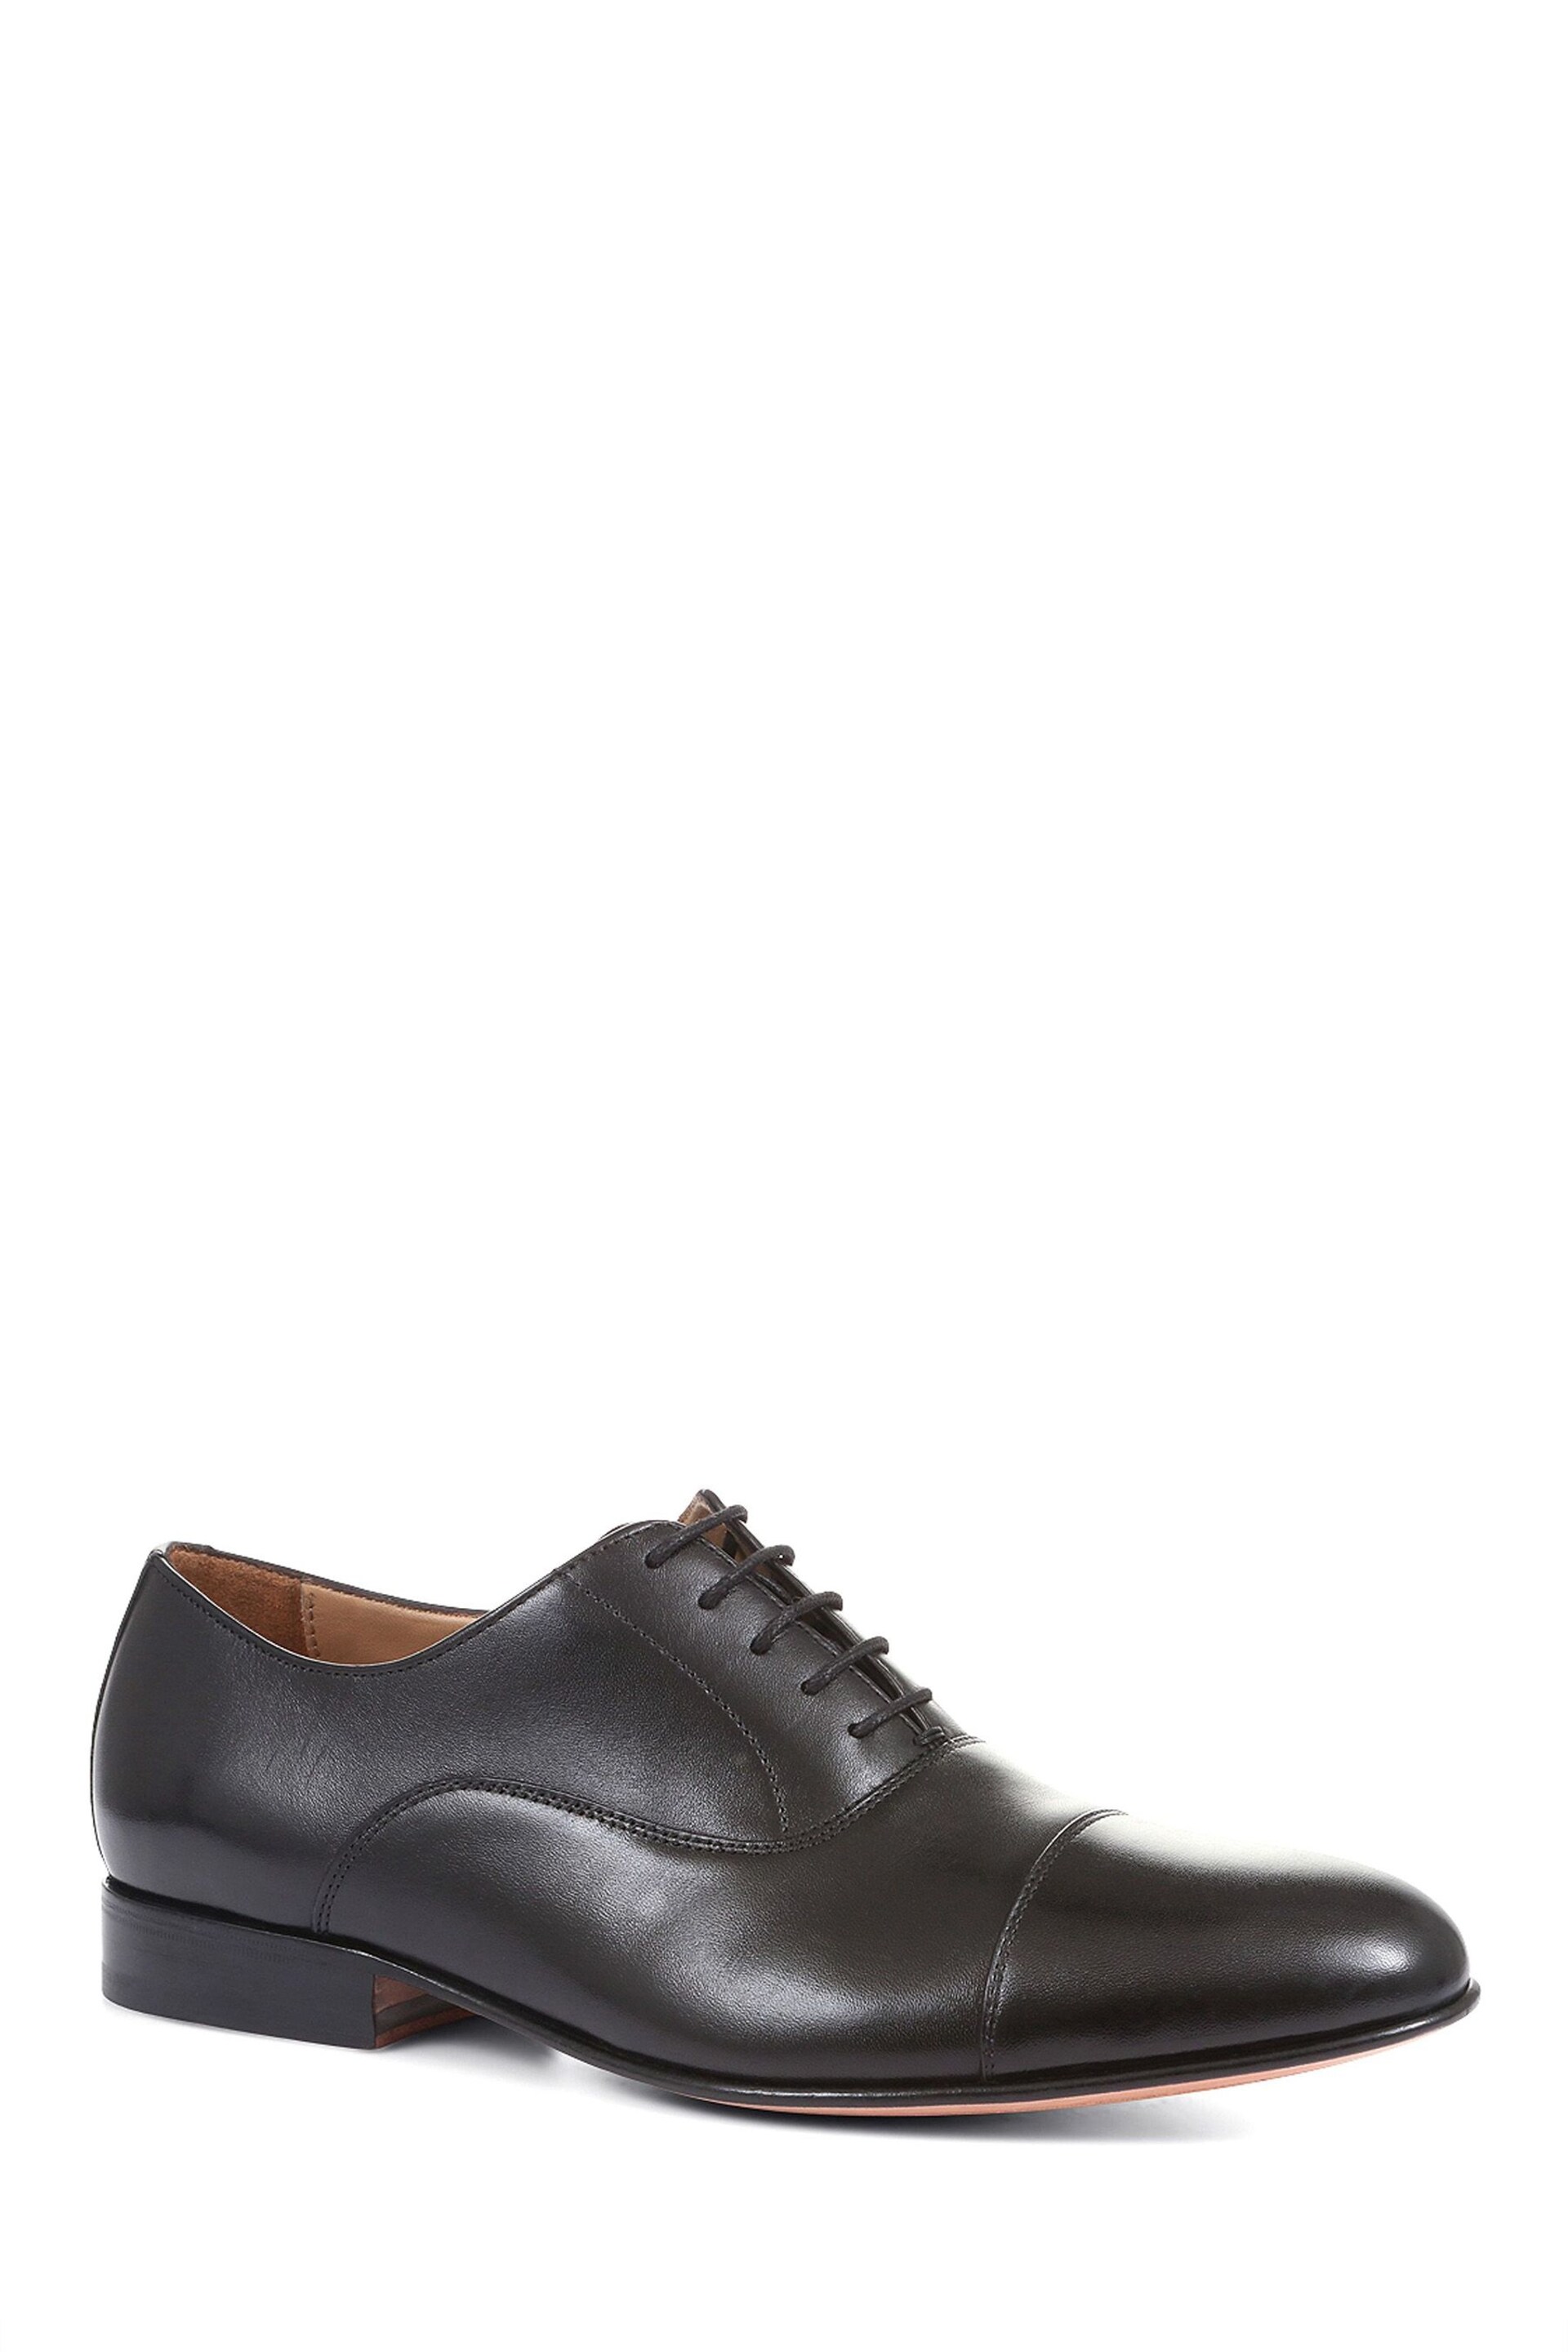 Jones Bootmaker Black Morpeth Leather Oxford Shoes - Image 2 of 5